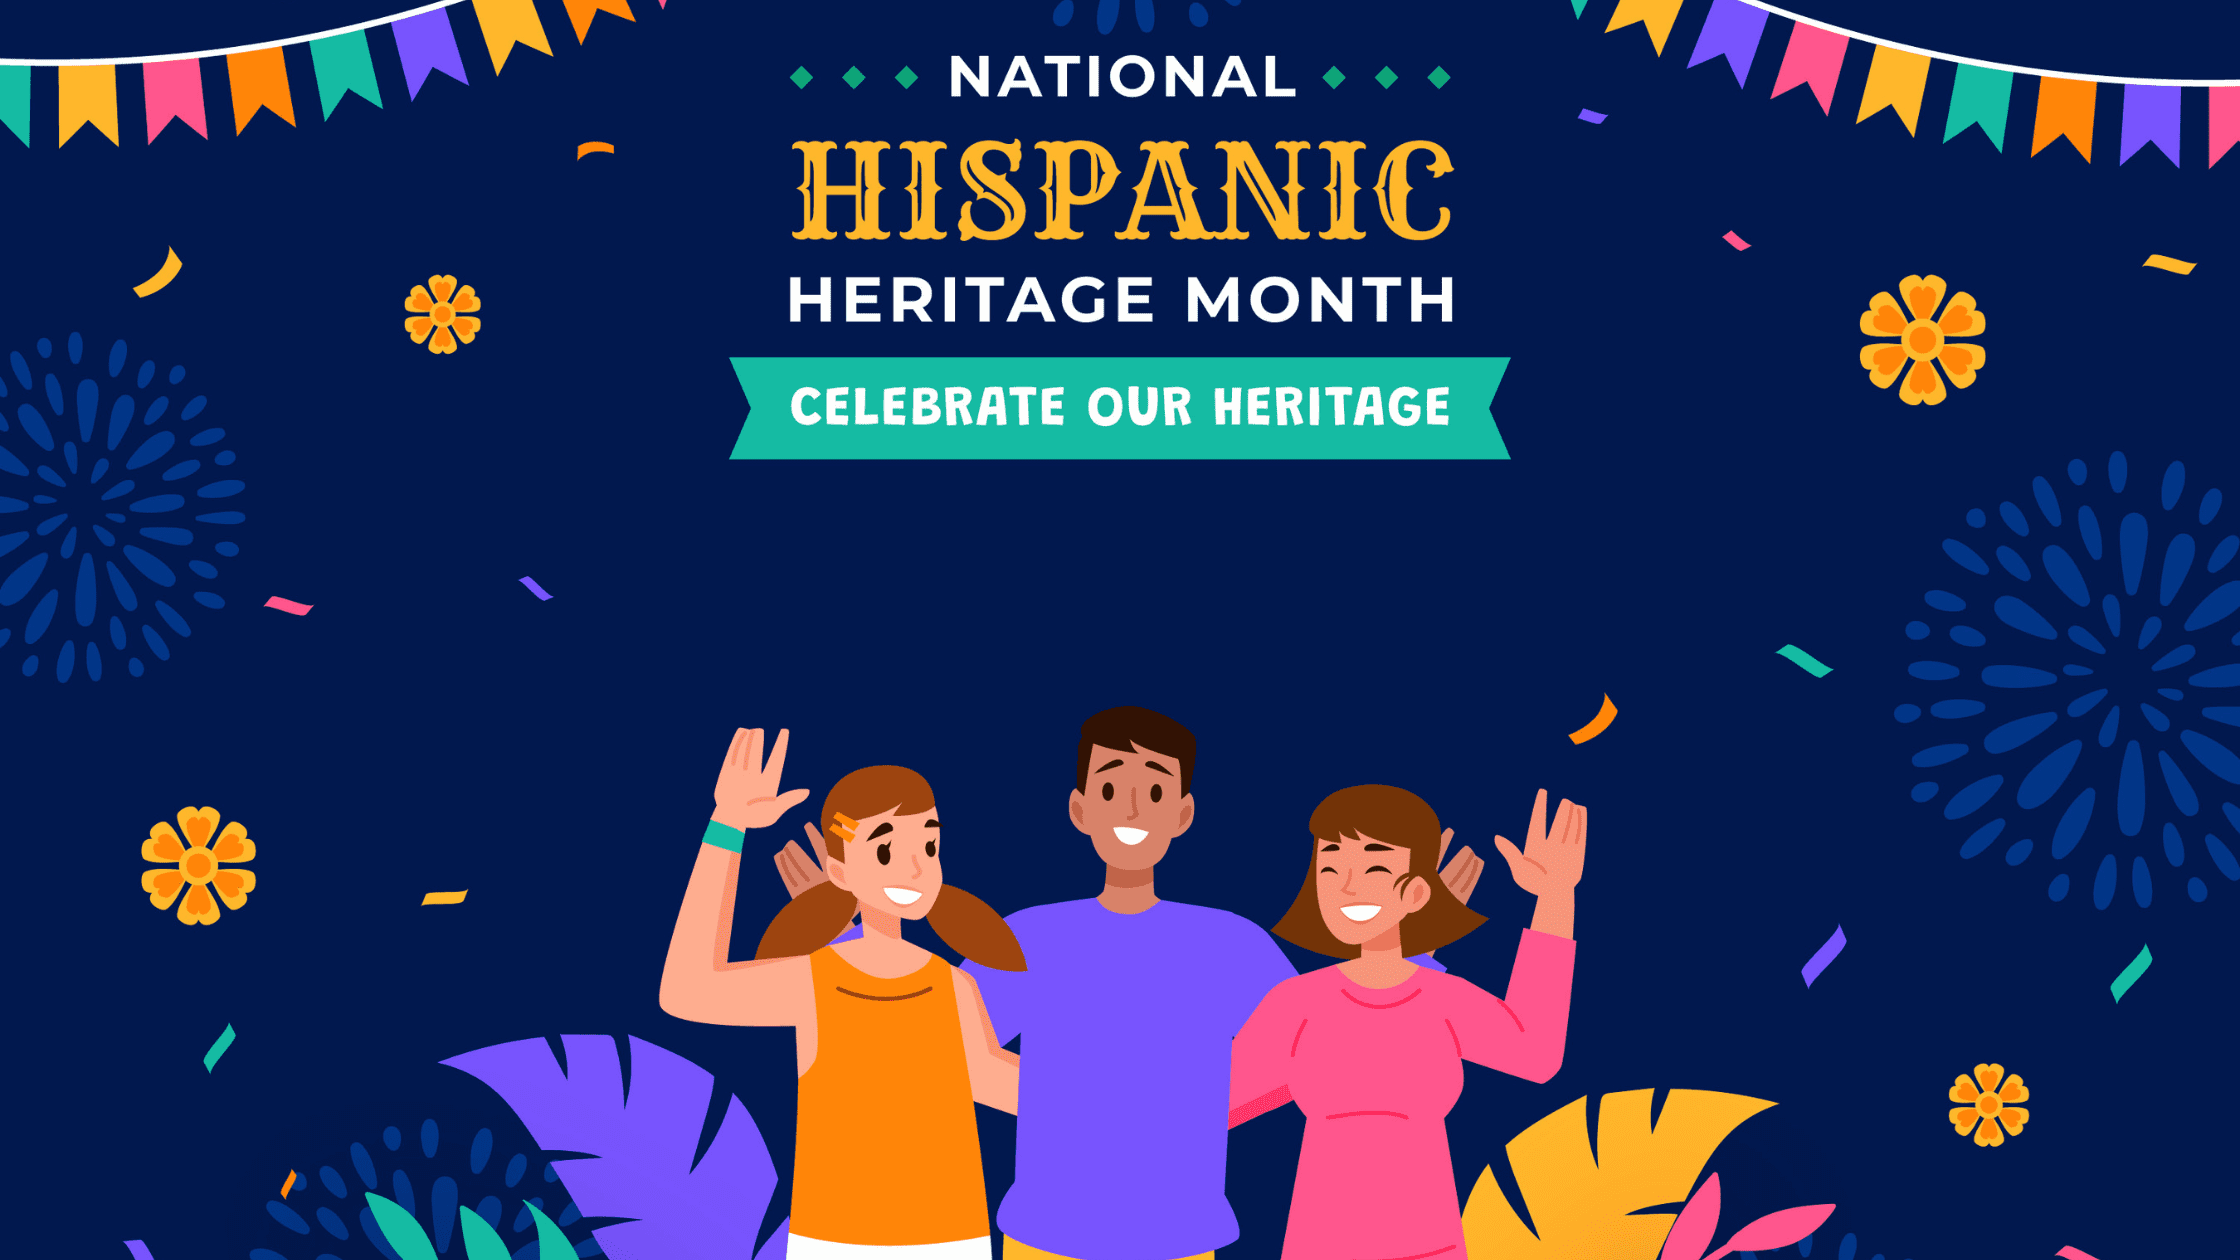 Celebremos juntos el National Hispanic Heritage Month